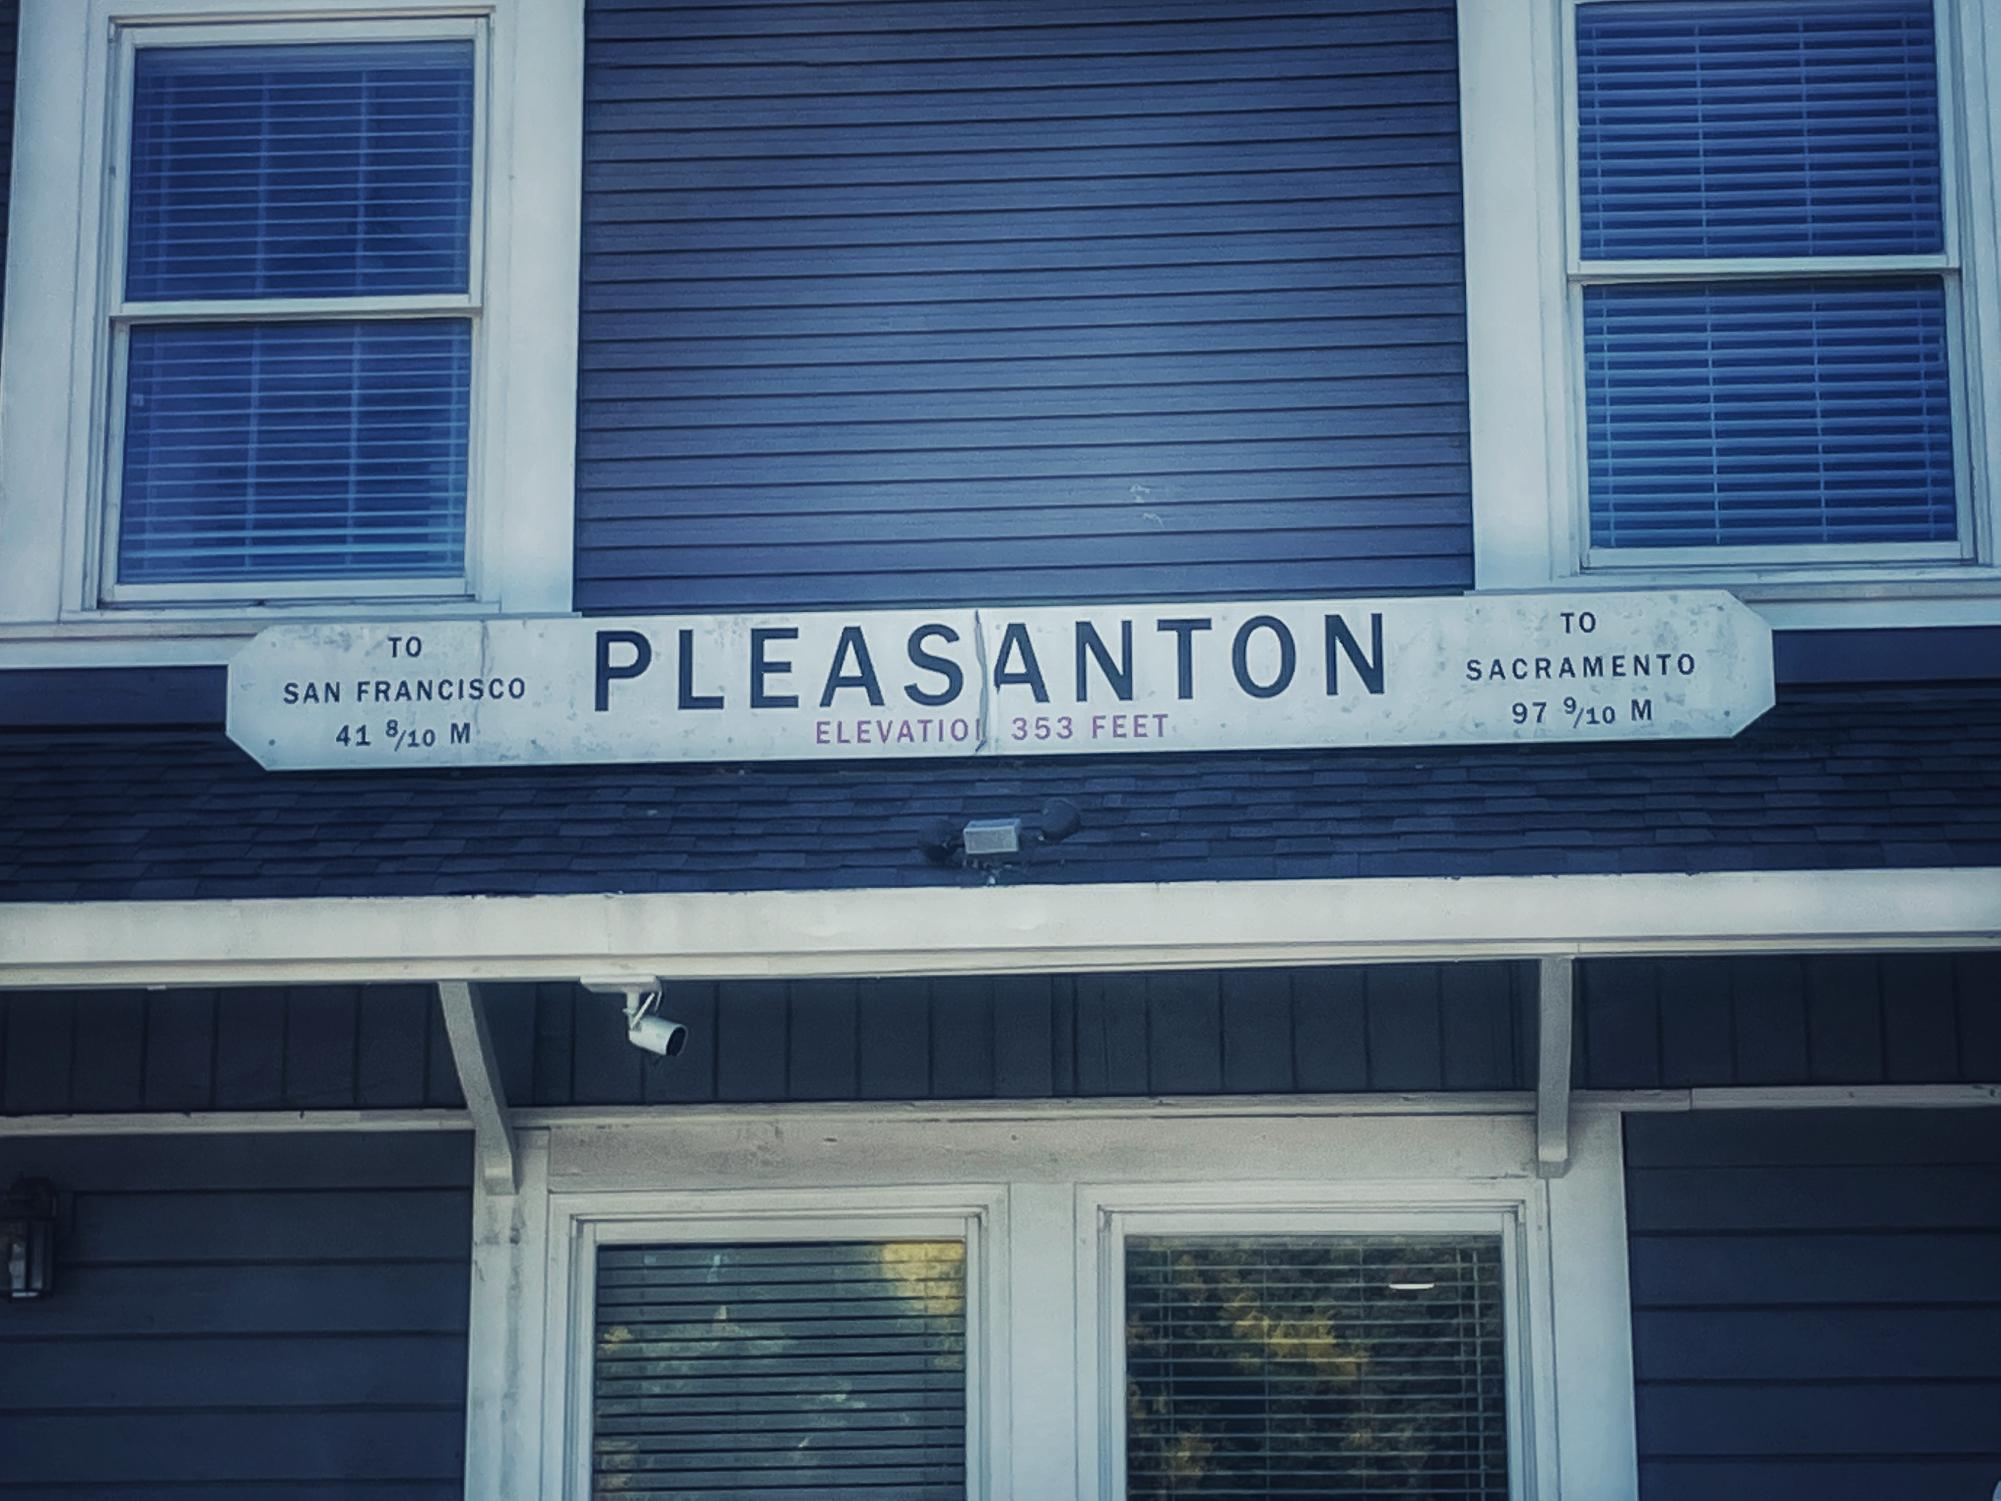 The+haunted+history+of+downtown+Pleasanton+through+photos